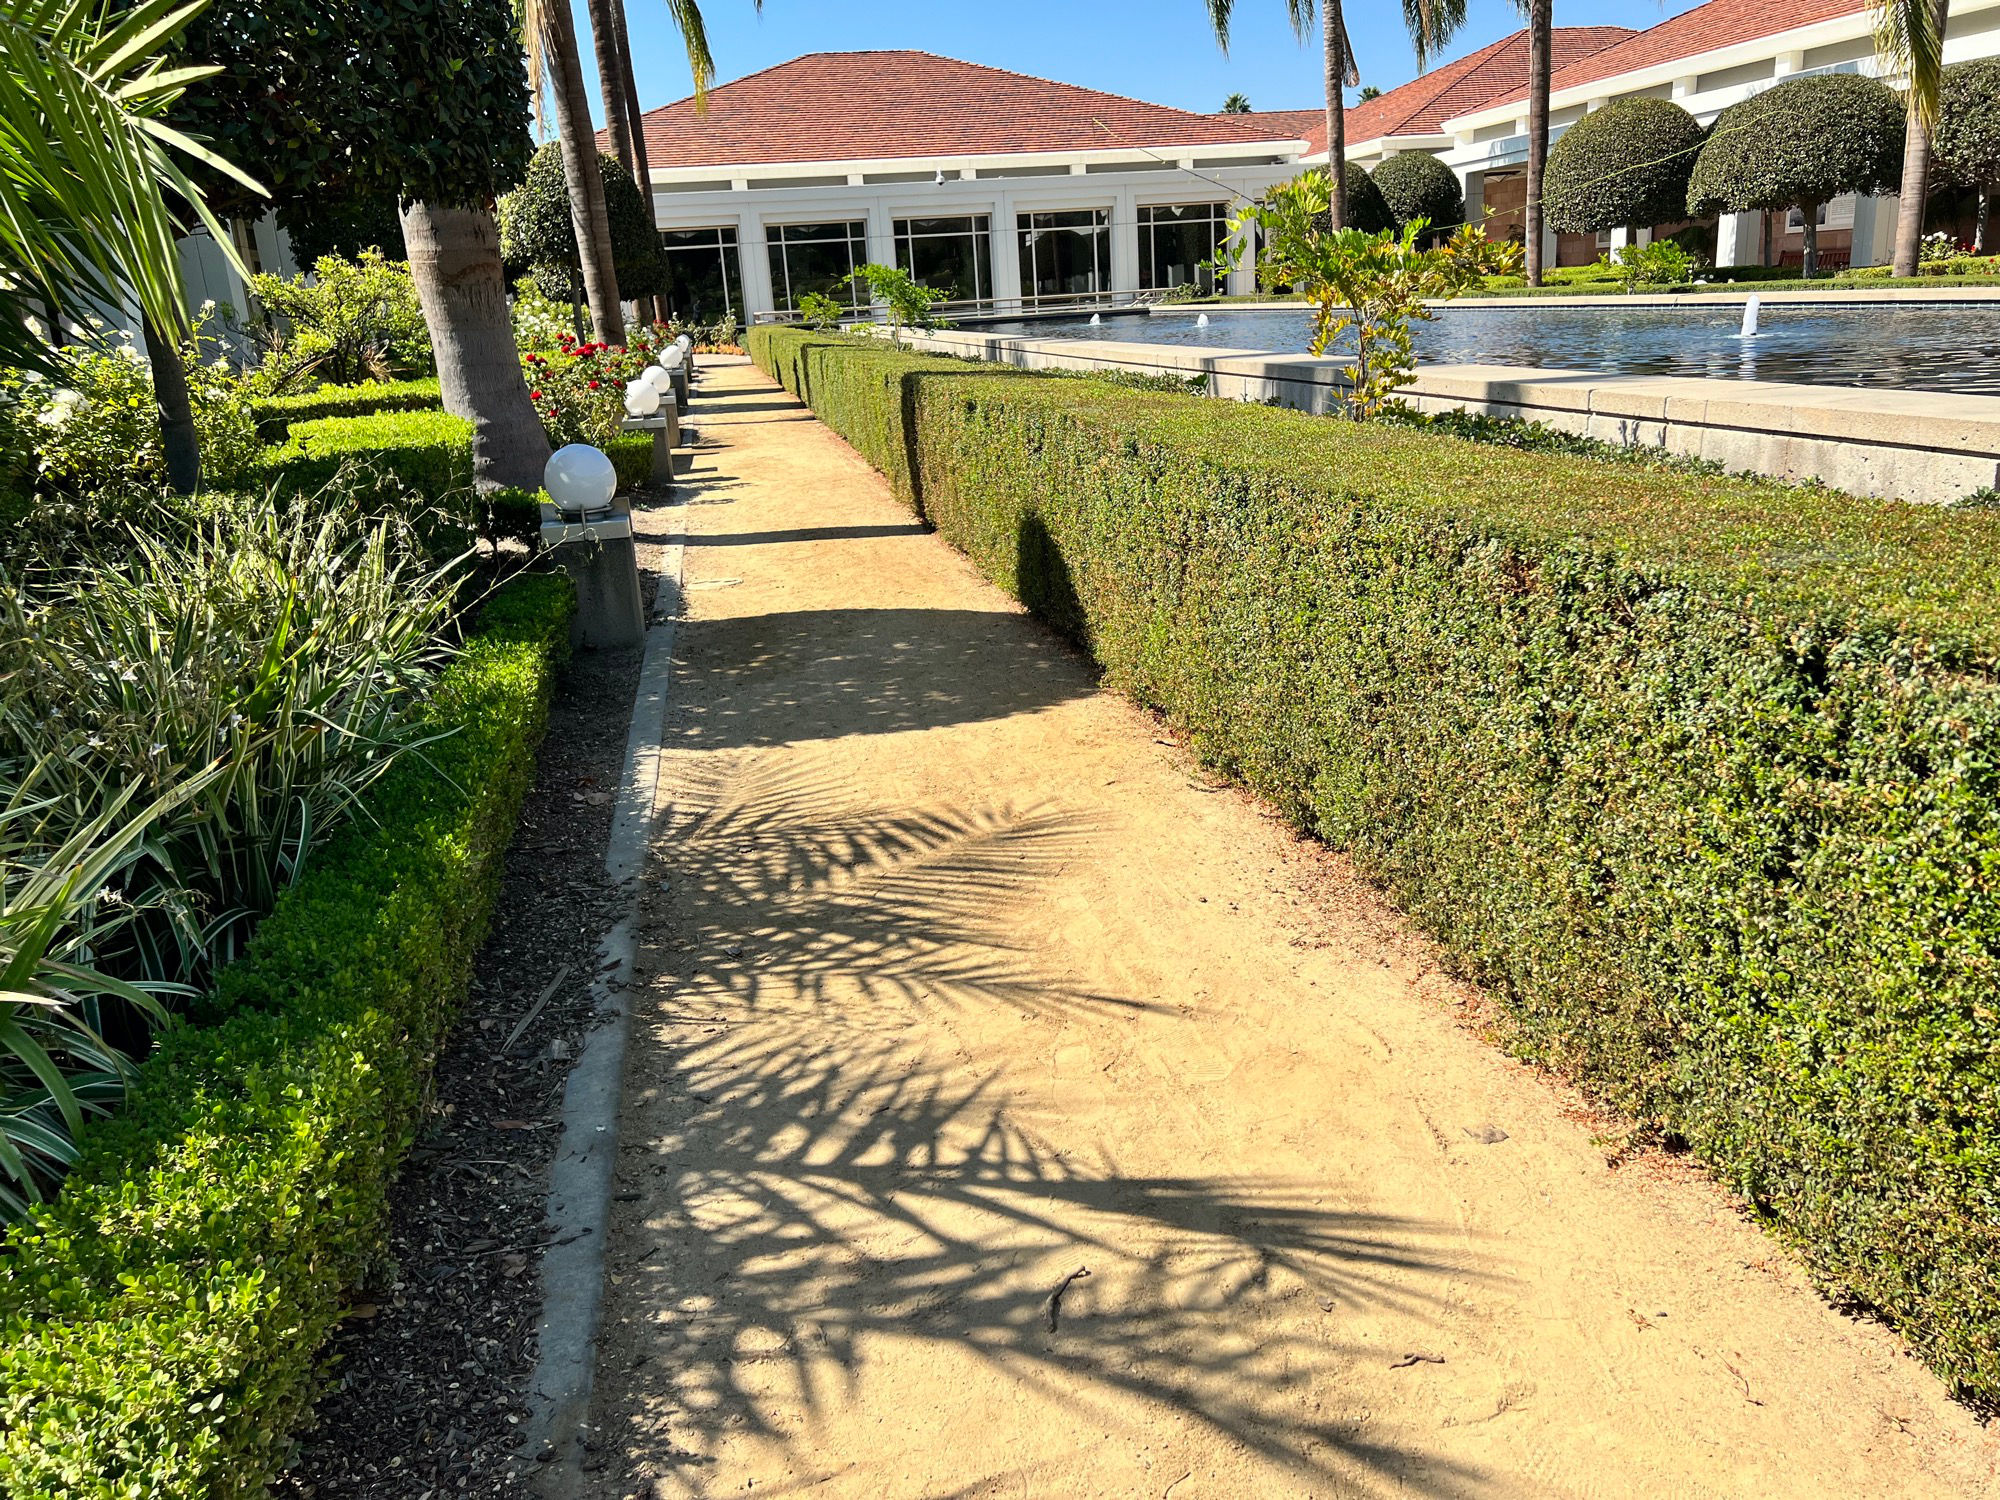 Nixon Library Garden Walkway